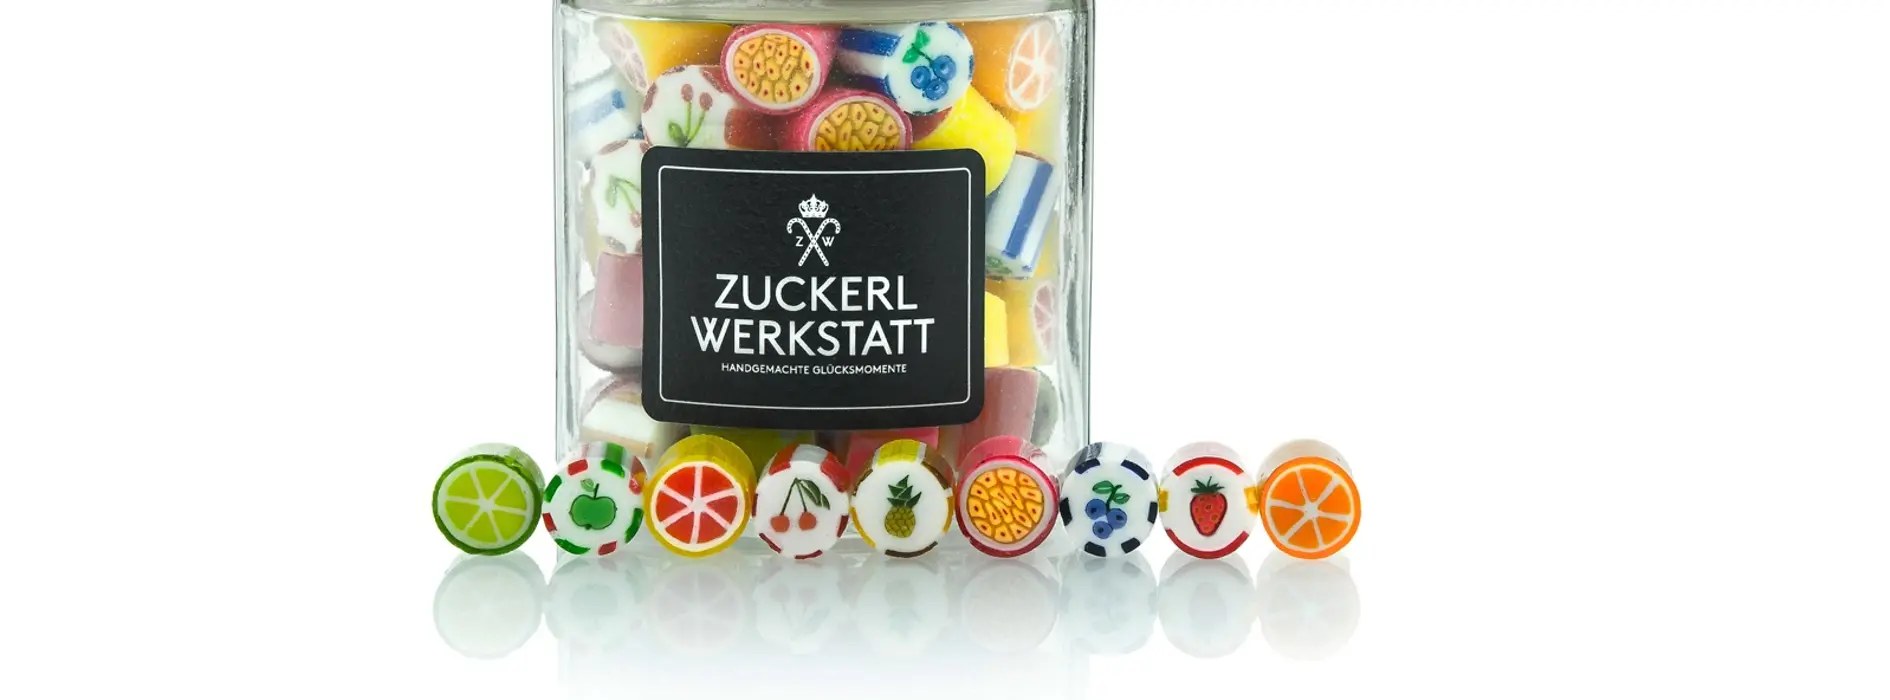 Zuckerlwerkstatt, glass of sweets